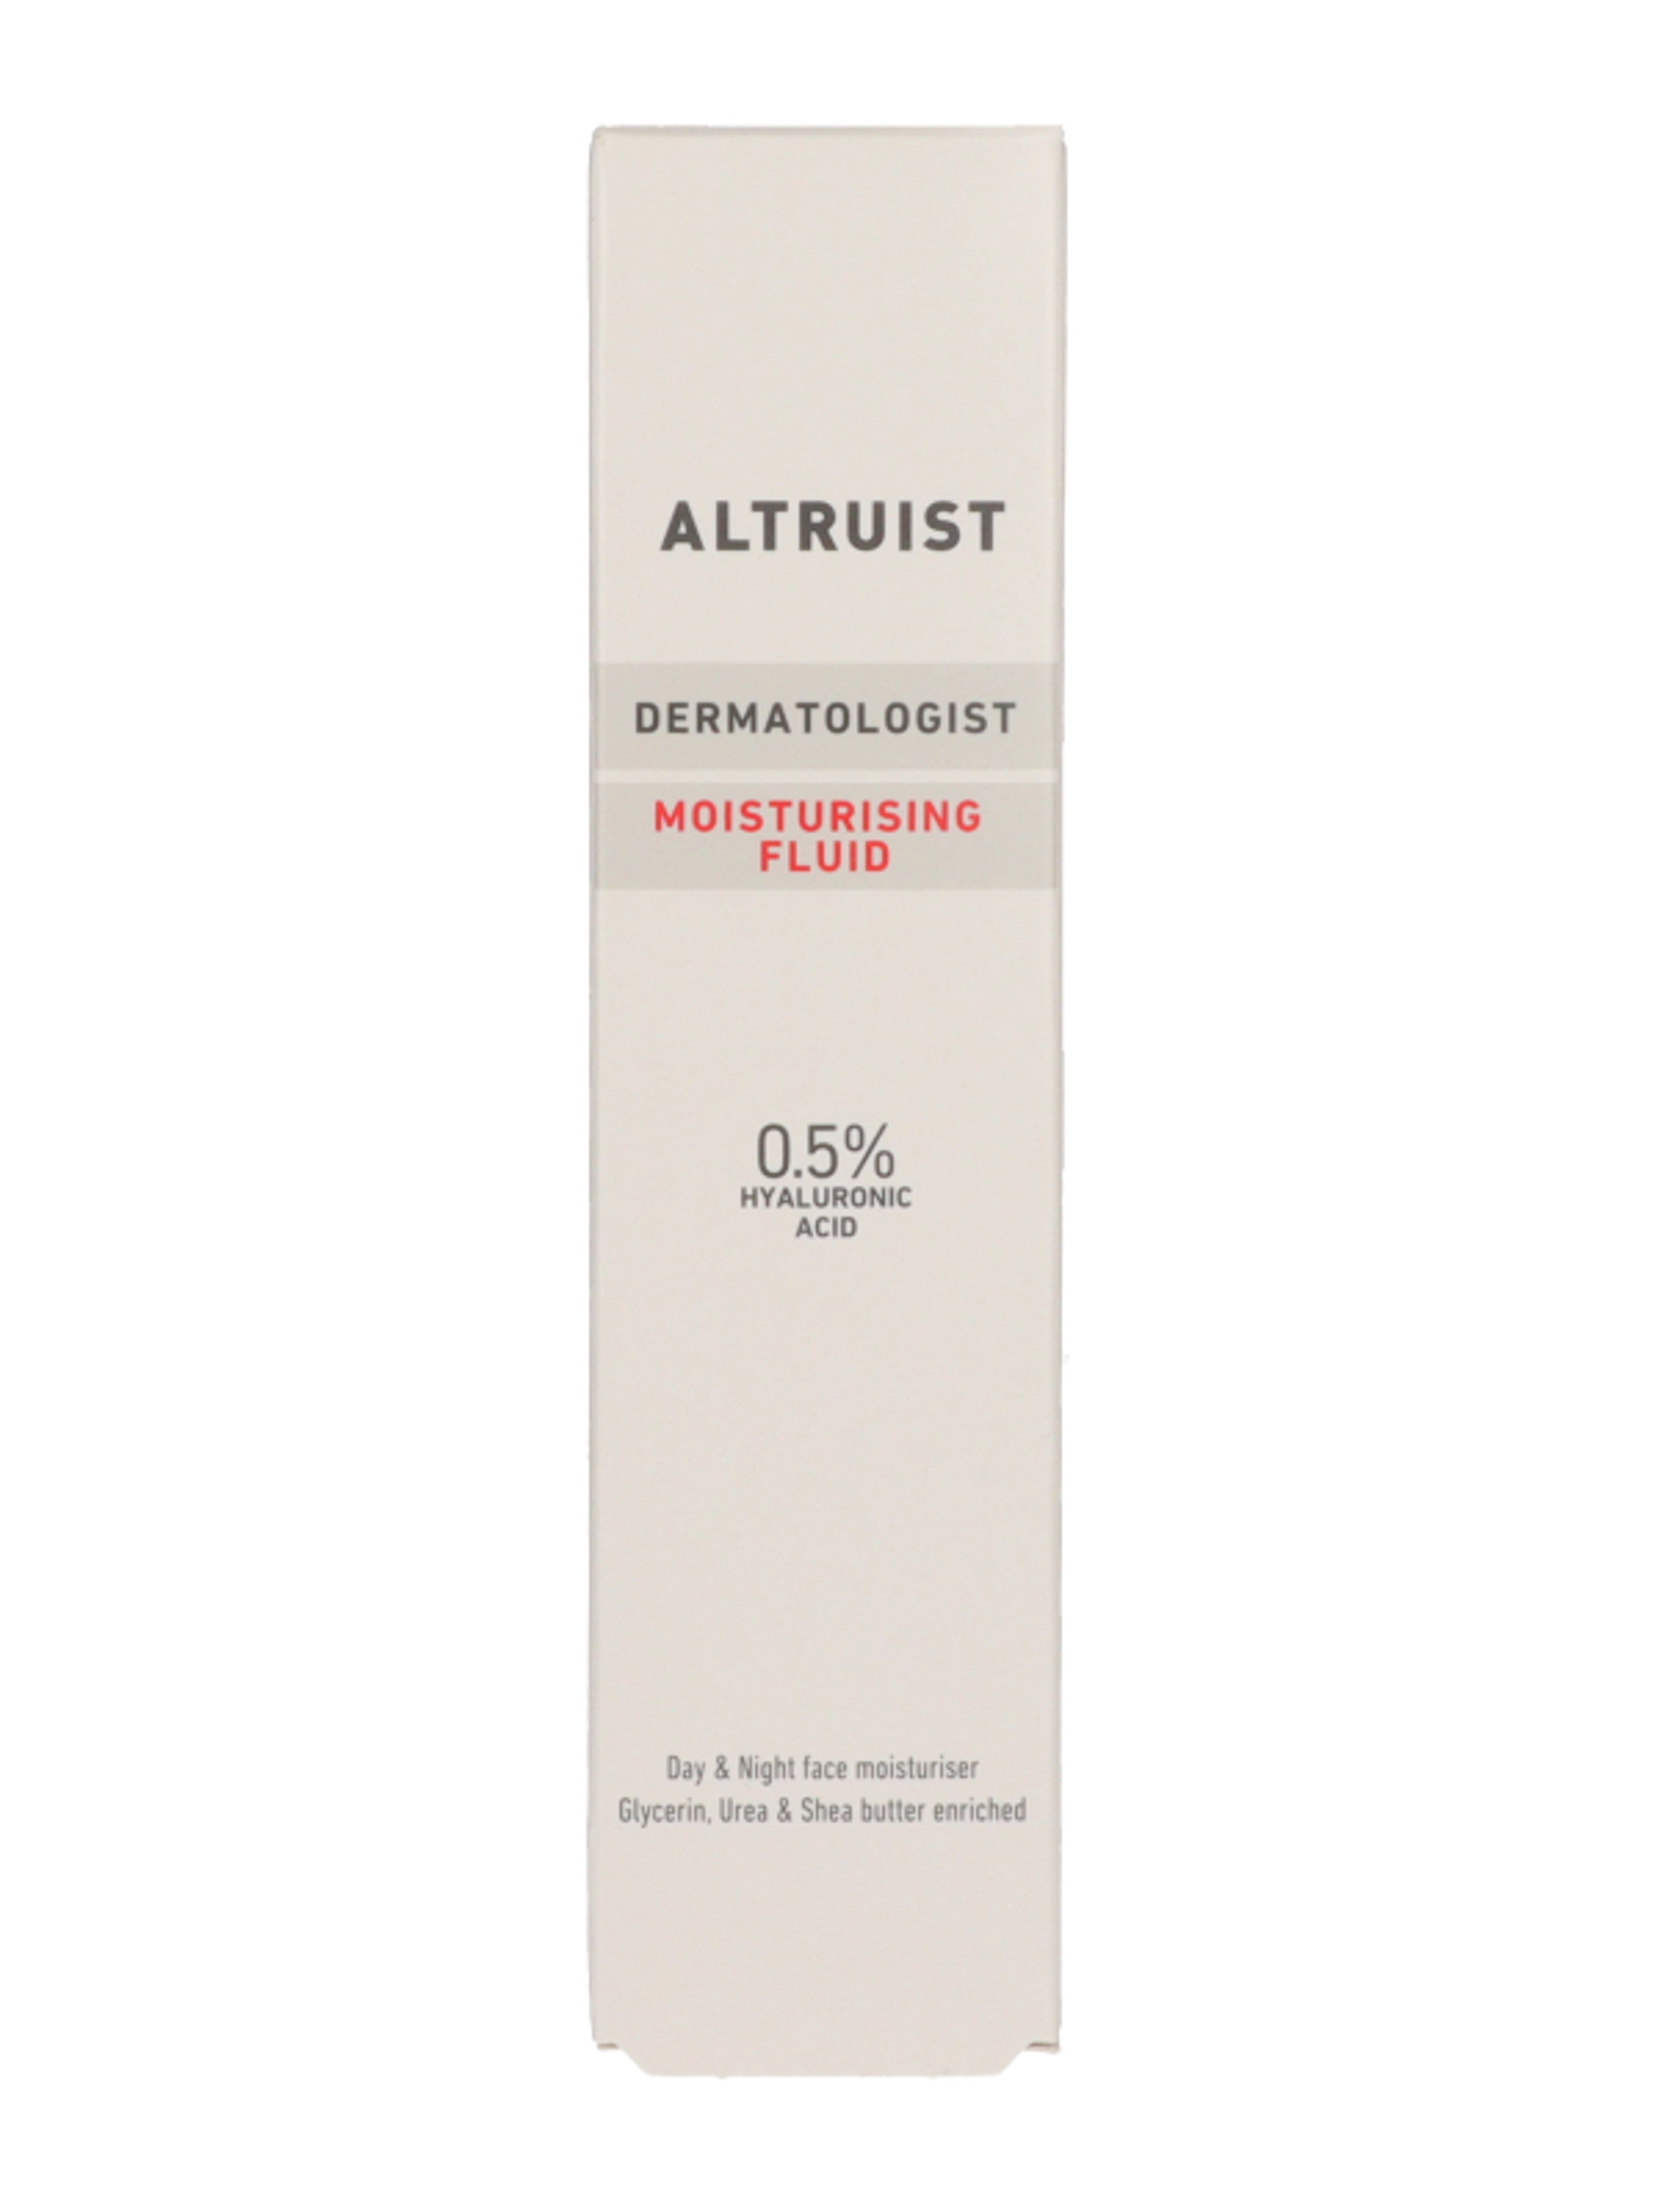 Altruist Dermatologist hidratáló fluid 0,5% hialuronsavval - 50 ml